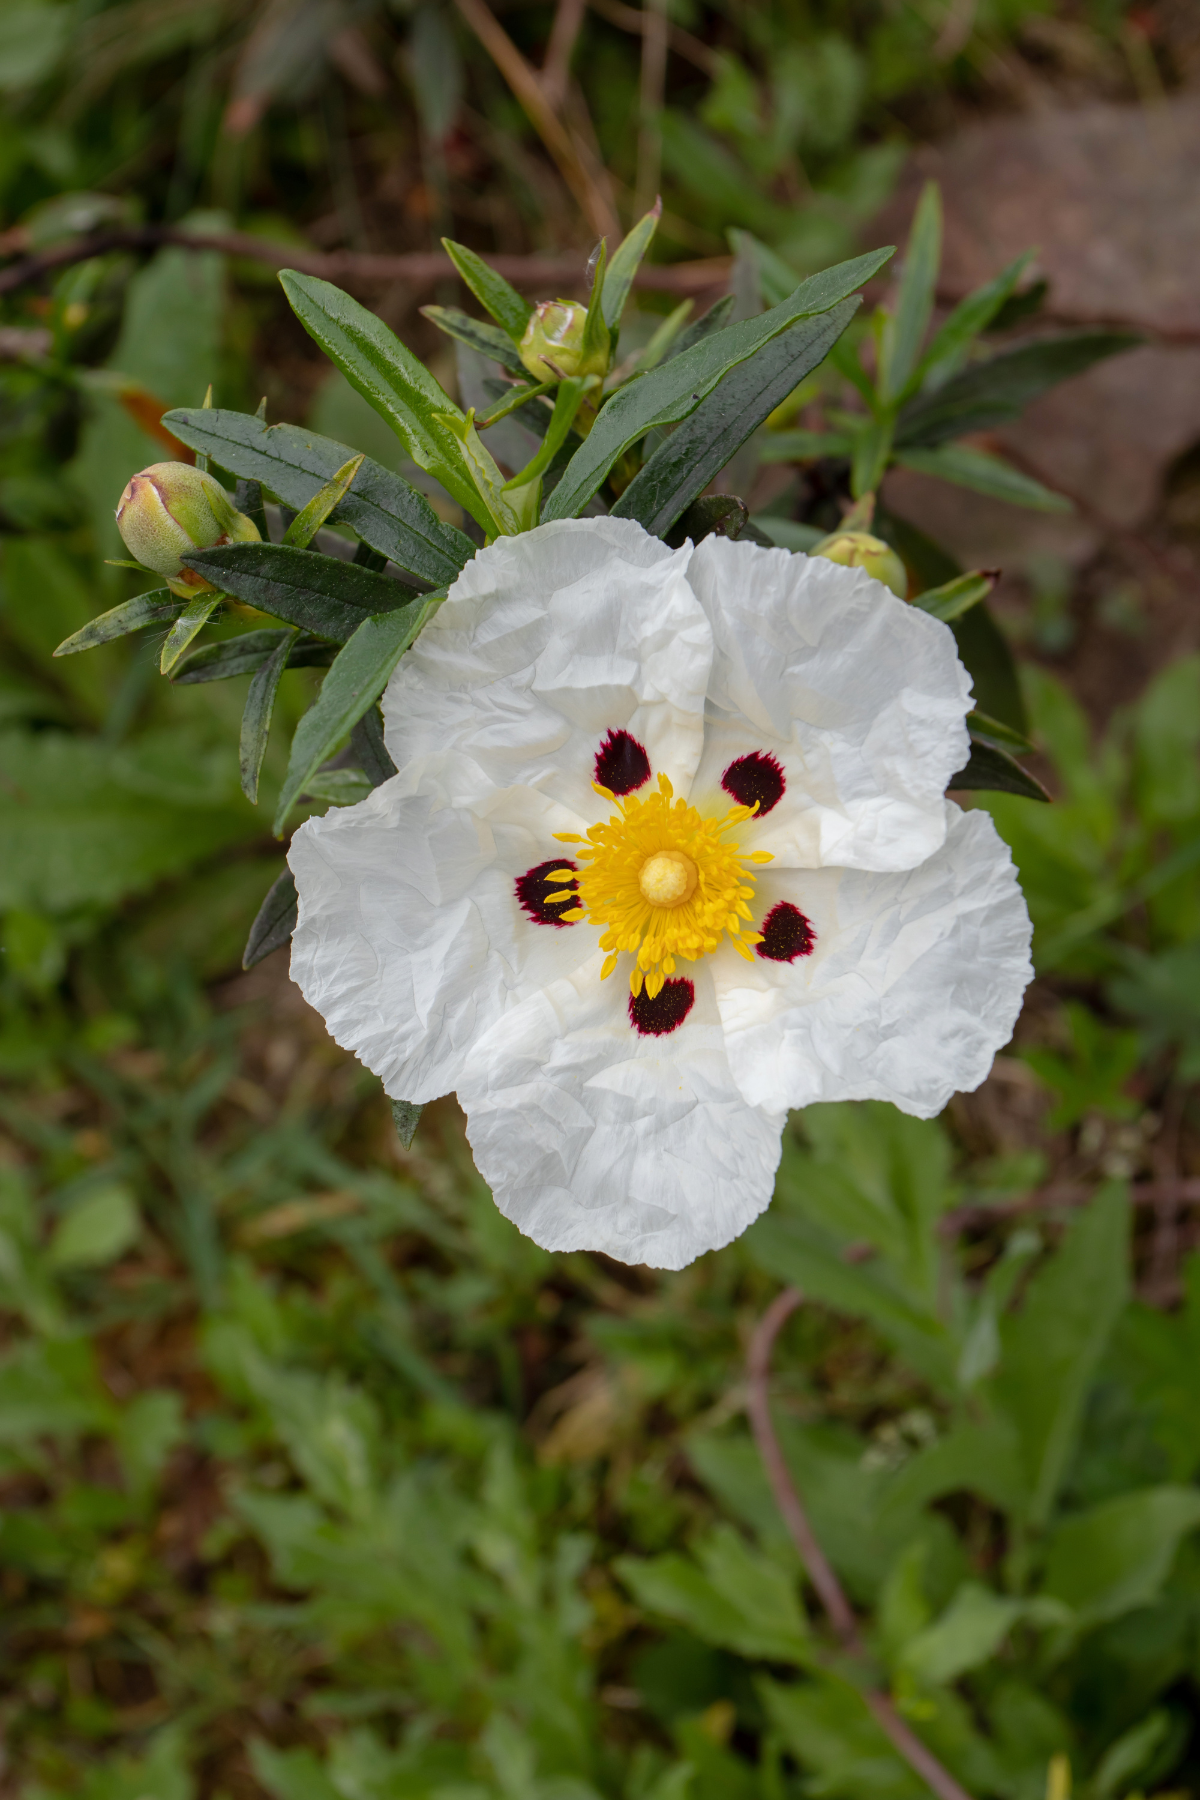 Fawn Lily Botanica | Rock Rose, also known as Labdanum or Cistus, Hydrosol Facial Toner